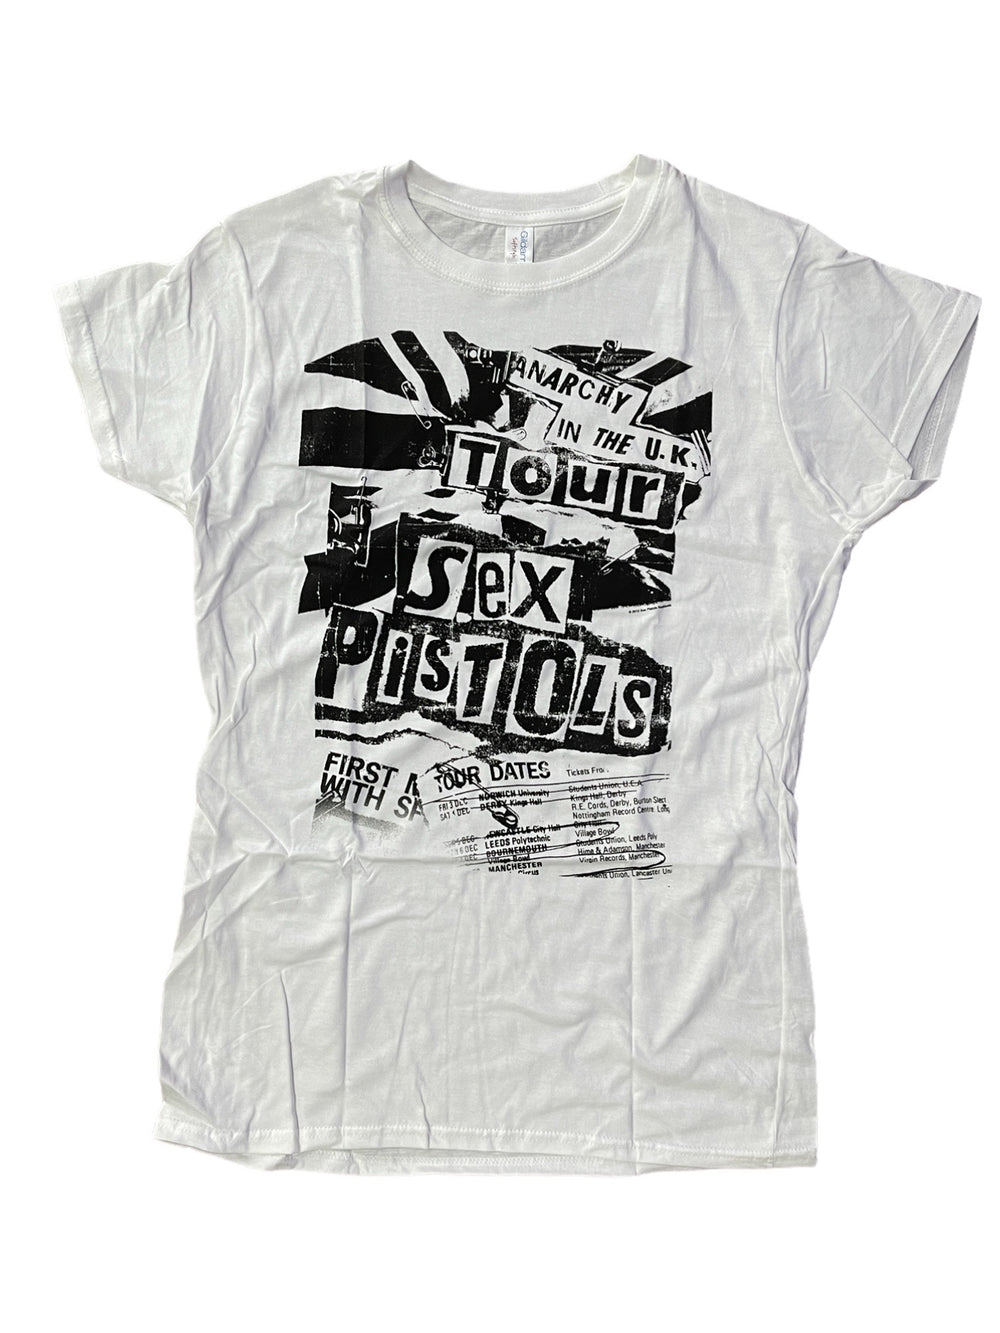 Sex Pistols On Tour White Ladies Official T-Shirt Brand New Various Sizes